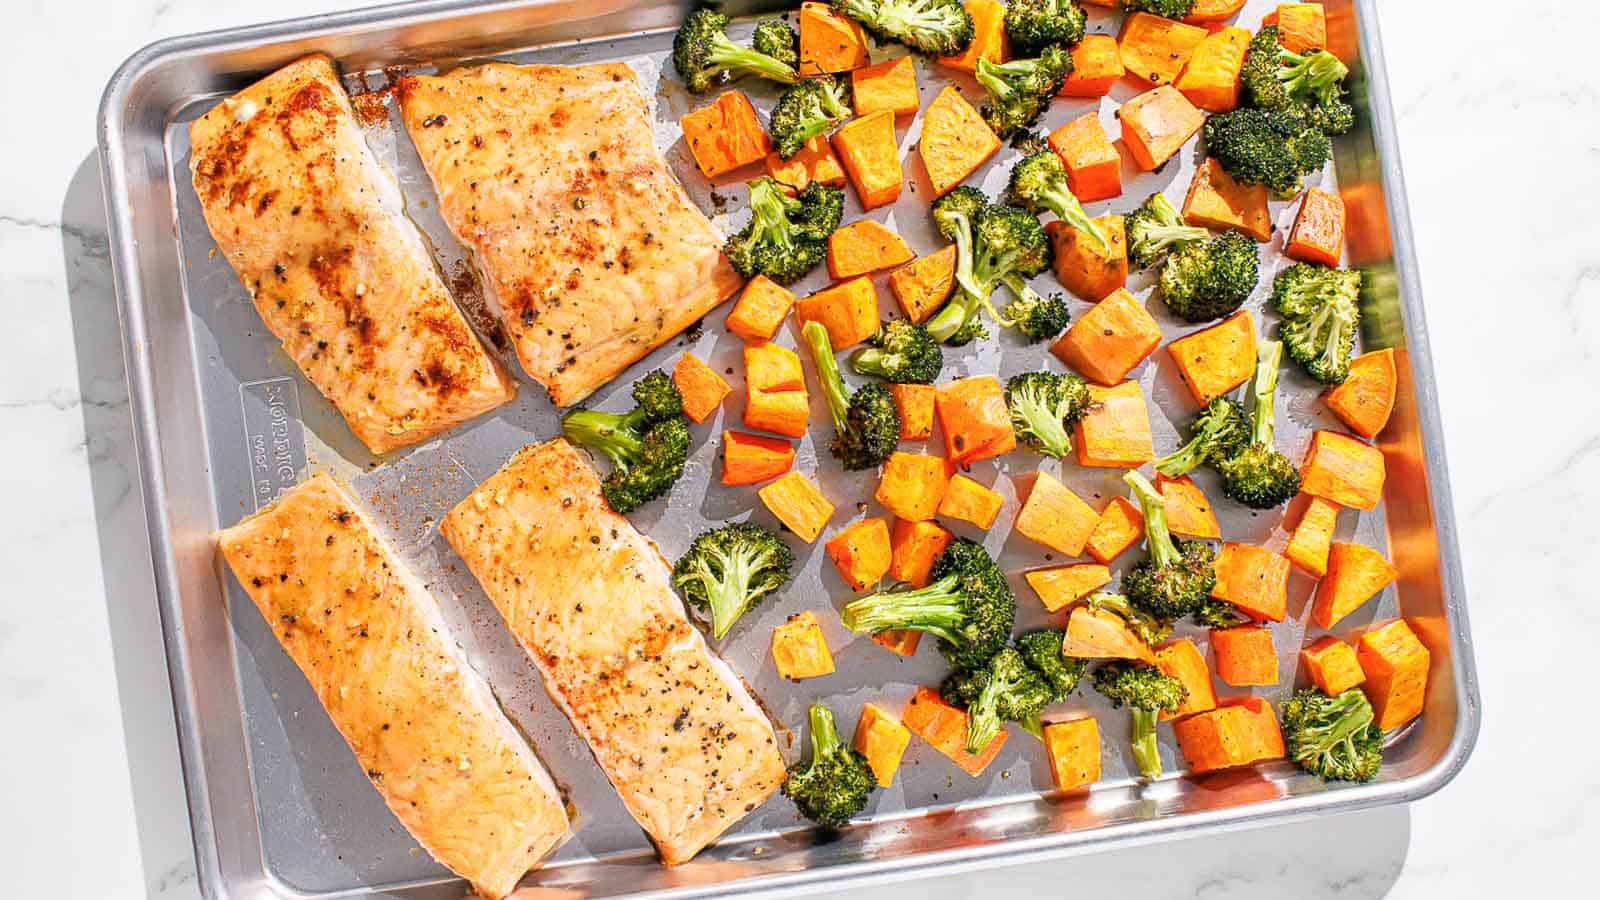 Salmon, sweet potato, and broccoli on a sheet tray.